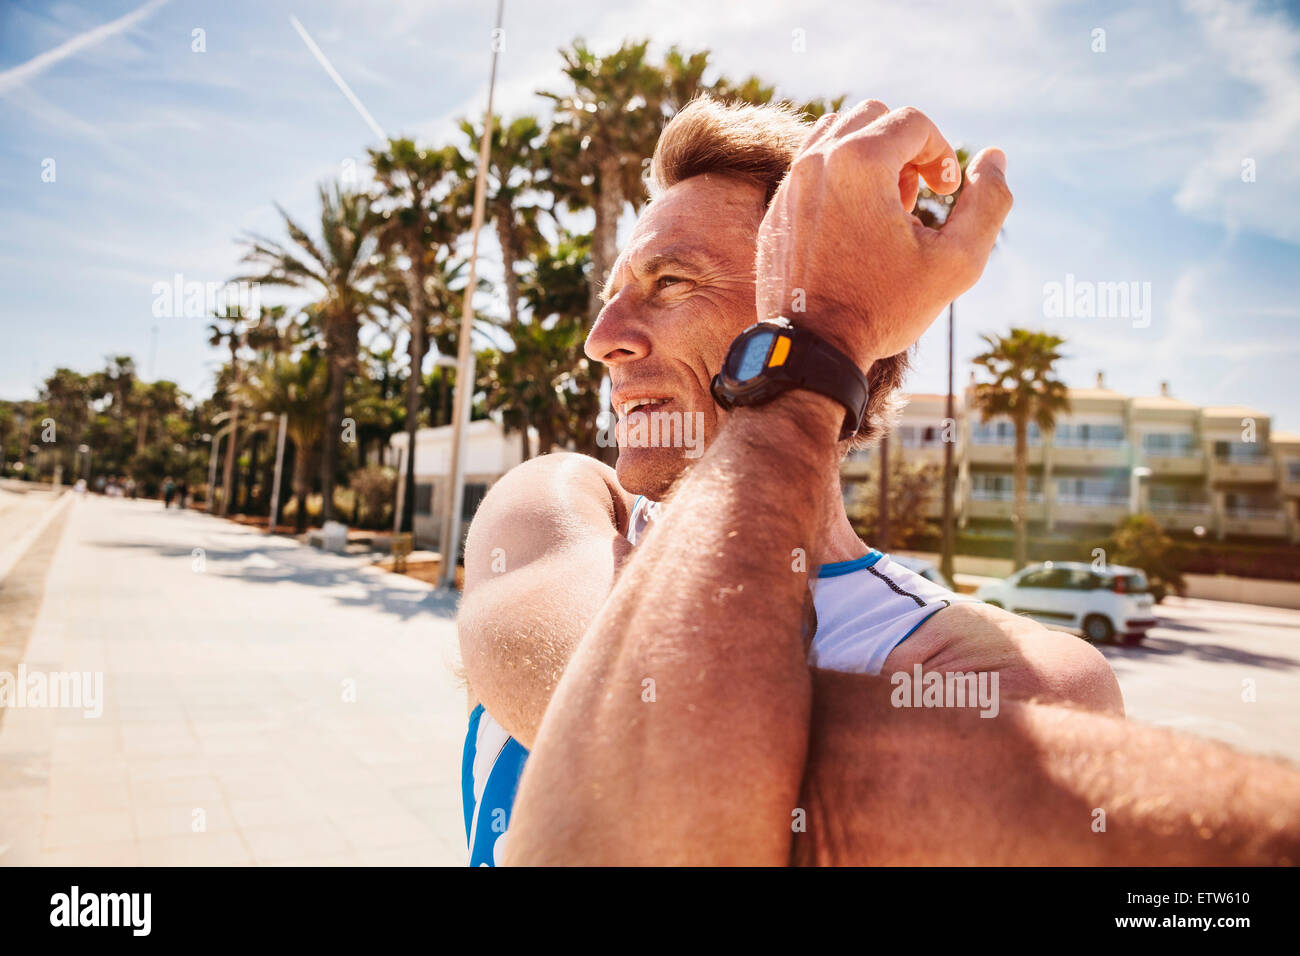 Spain, Mallorca, Sa Coma, triathlet stretching on the beach promenade Stock Photo